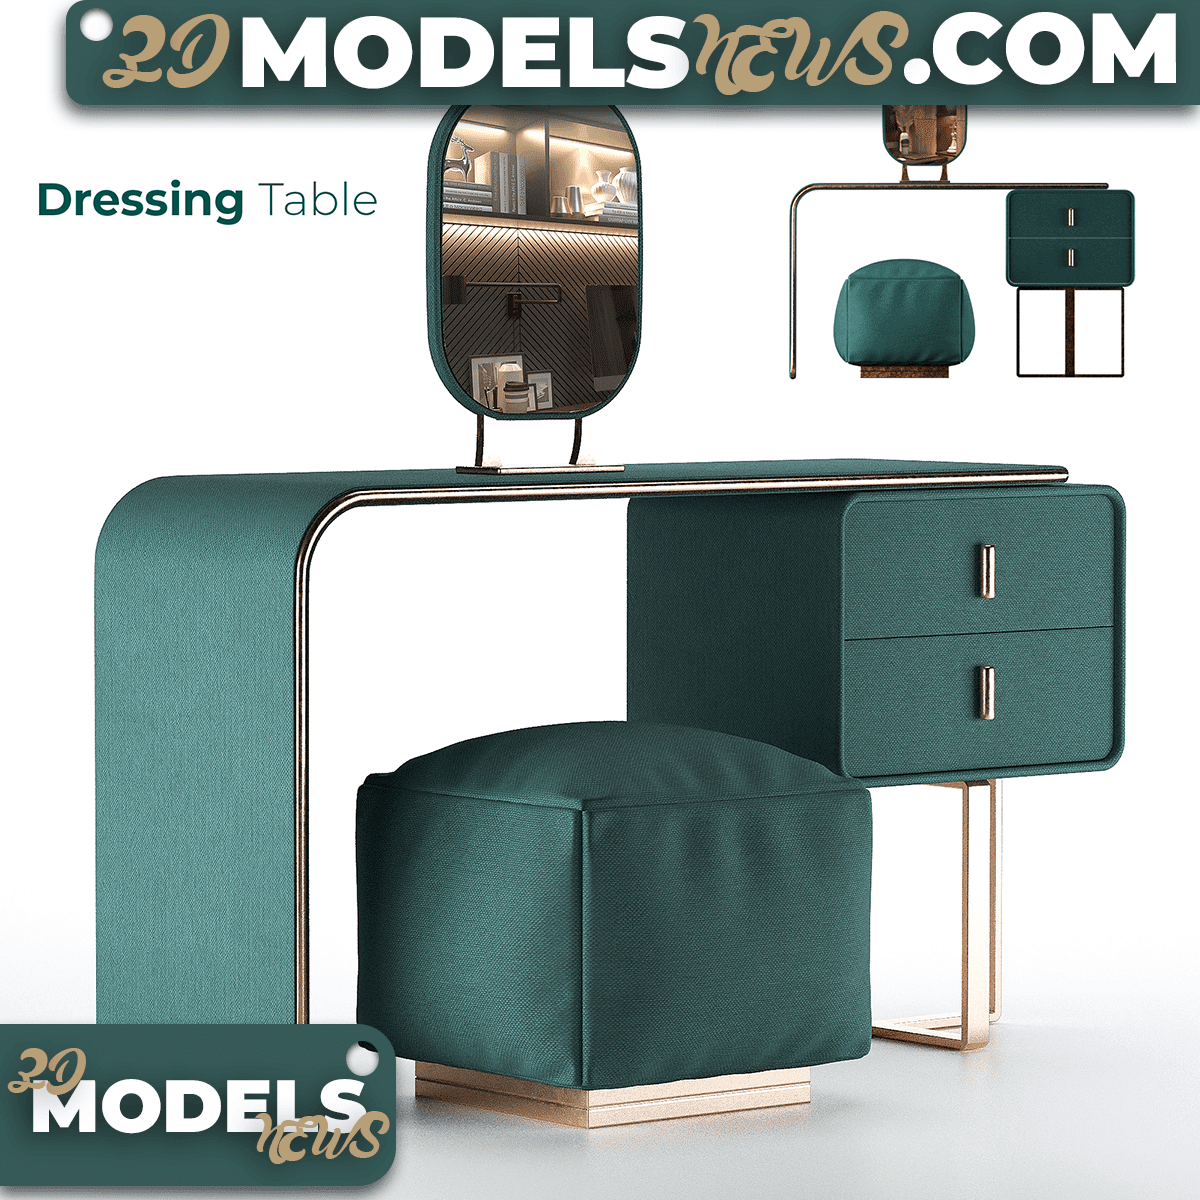 Dressing table model for interior 1